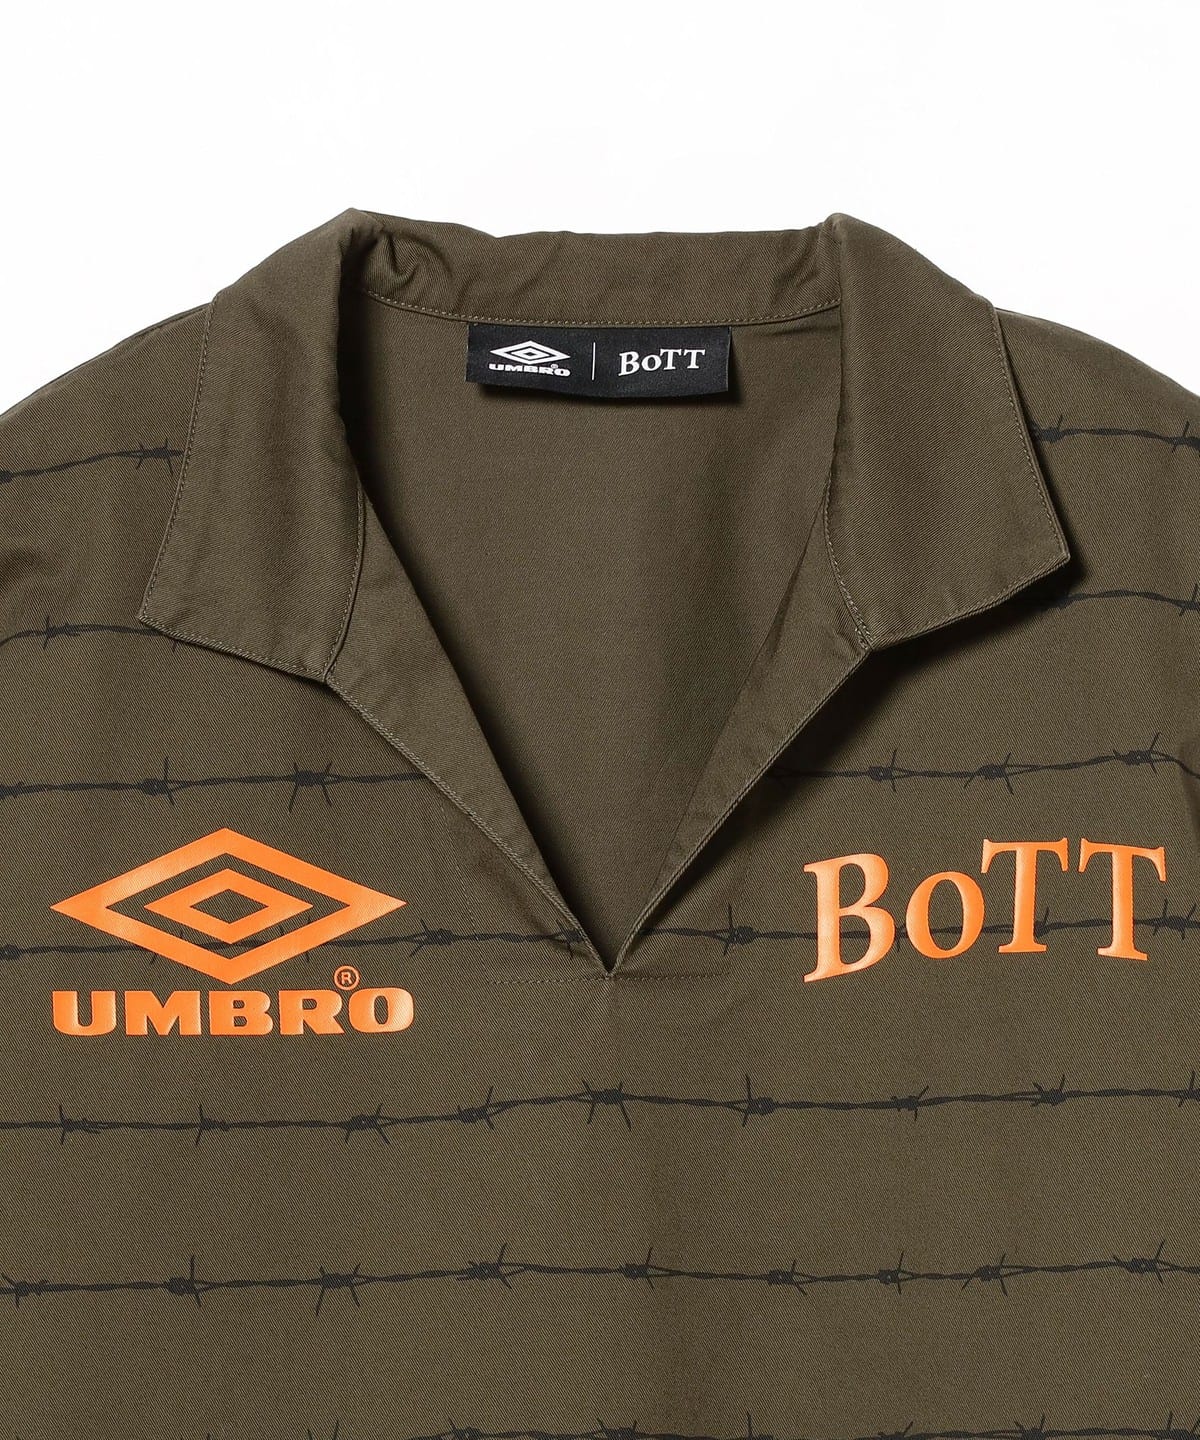 bott umbro beams Pullover Shirt サイズL 新品袖丈62cmになります